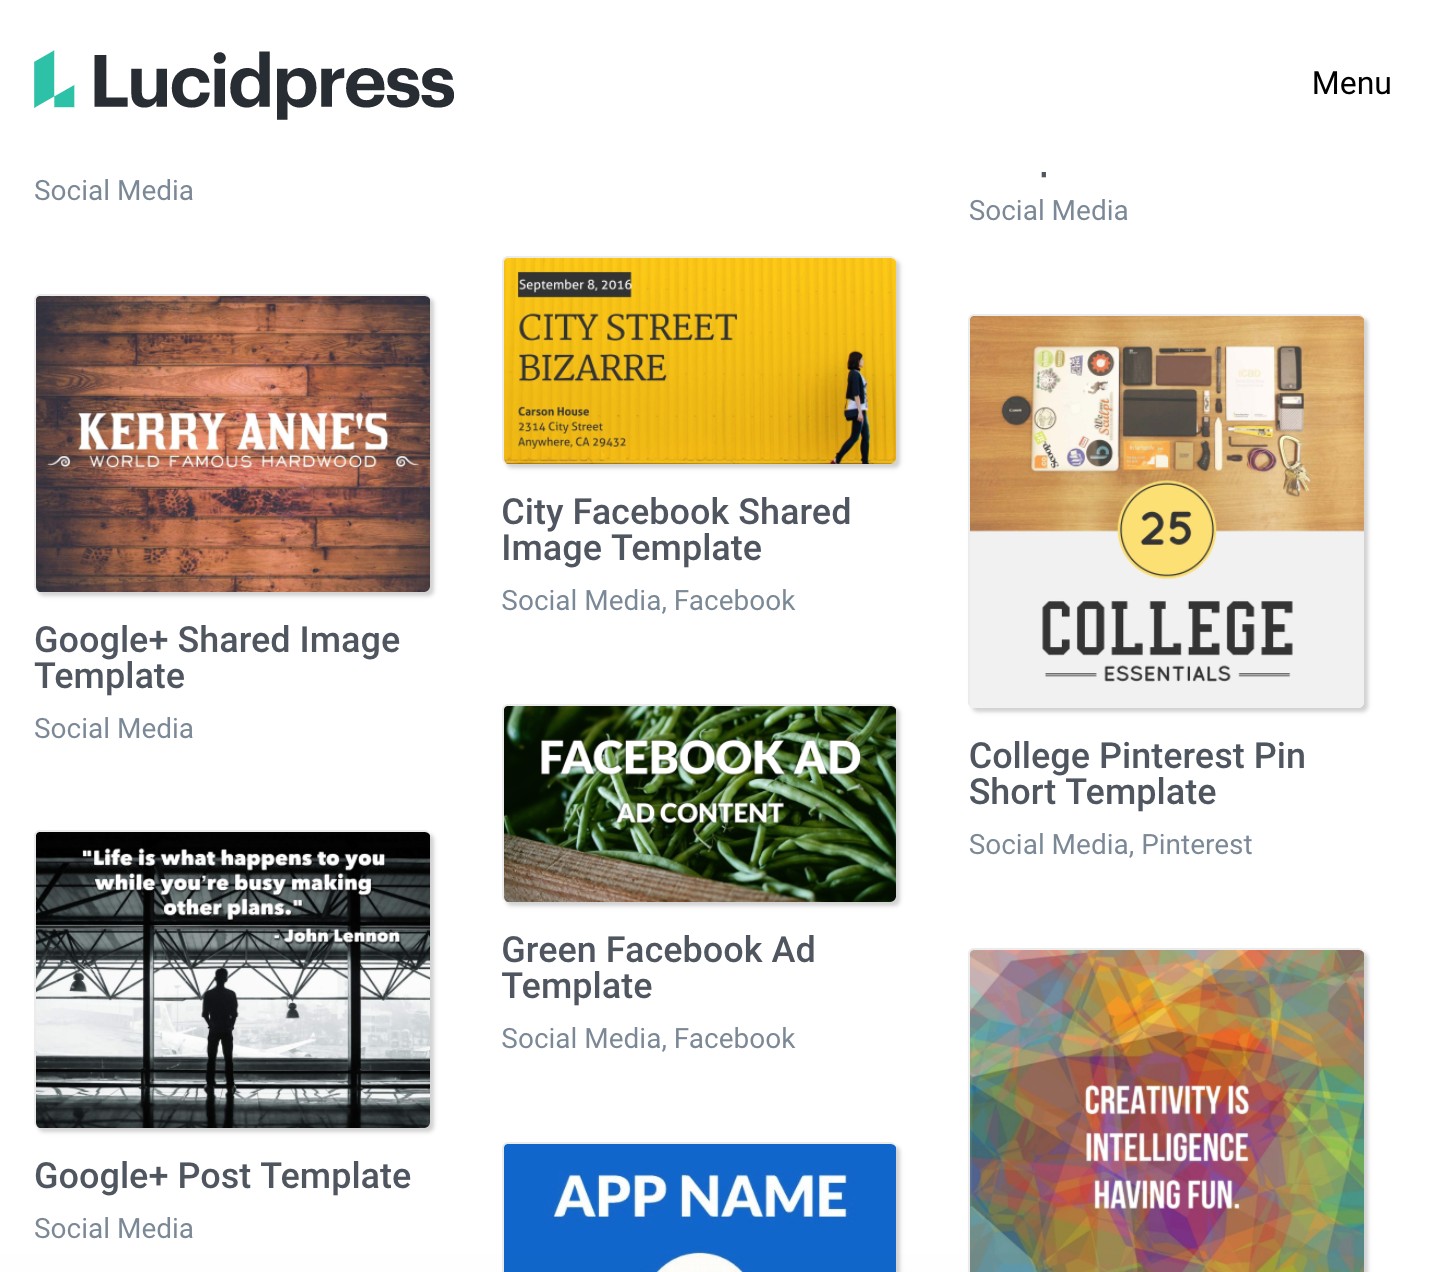 Lucidpress homepage